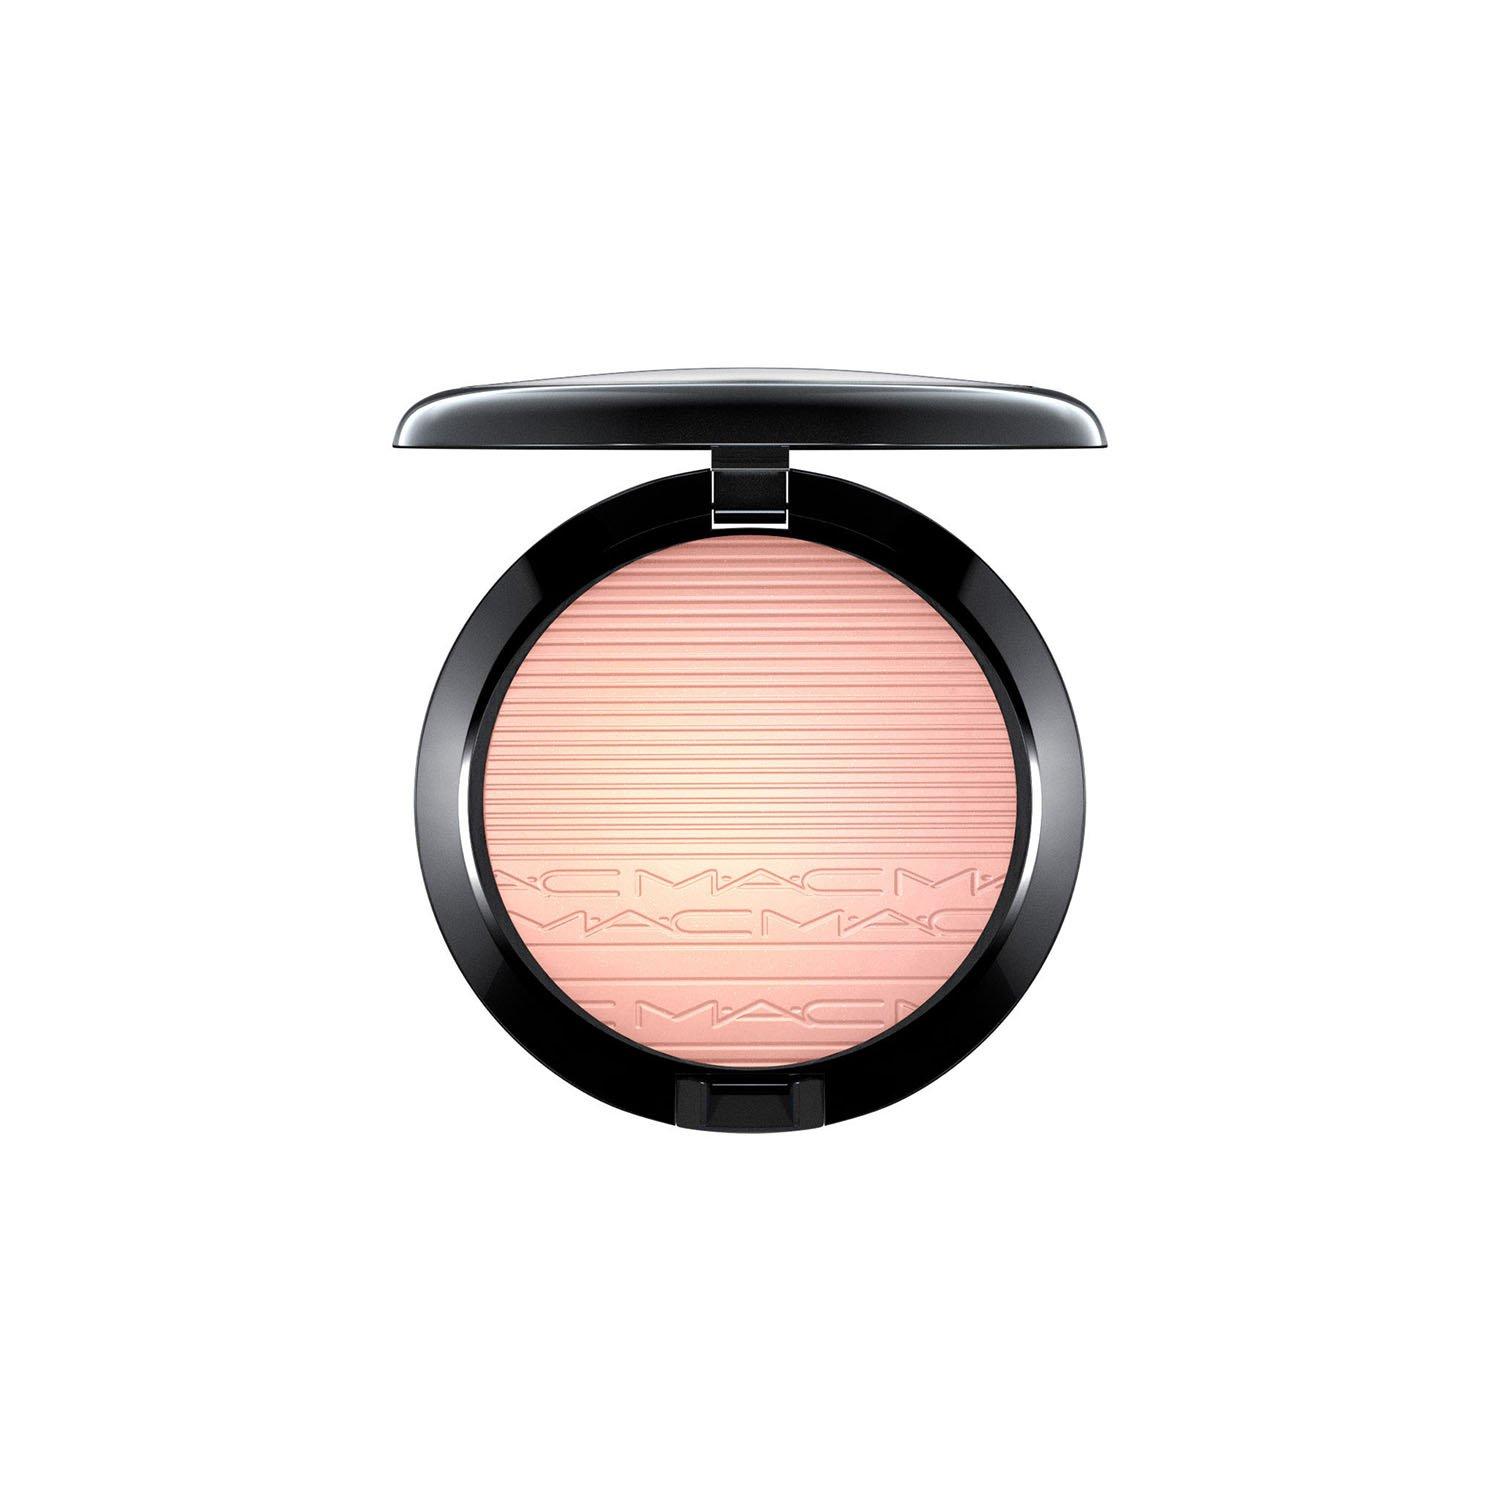 Extra Dimension Skinfinish Liquid-power Highlighter Damen Beaming Blush 9g von MAC Cosmetics